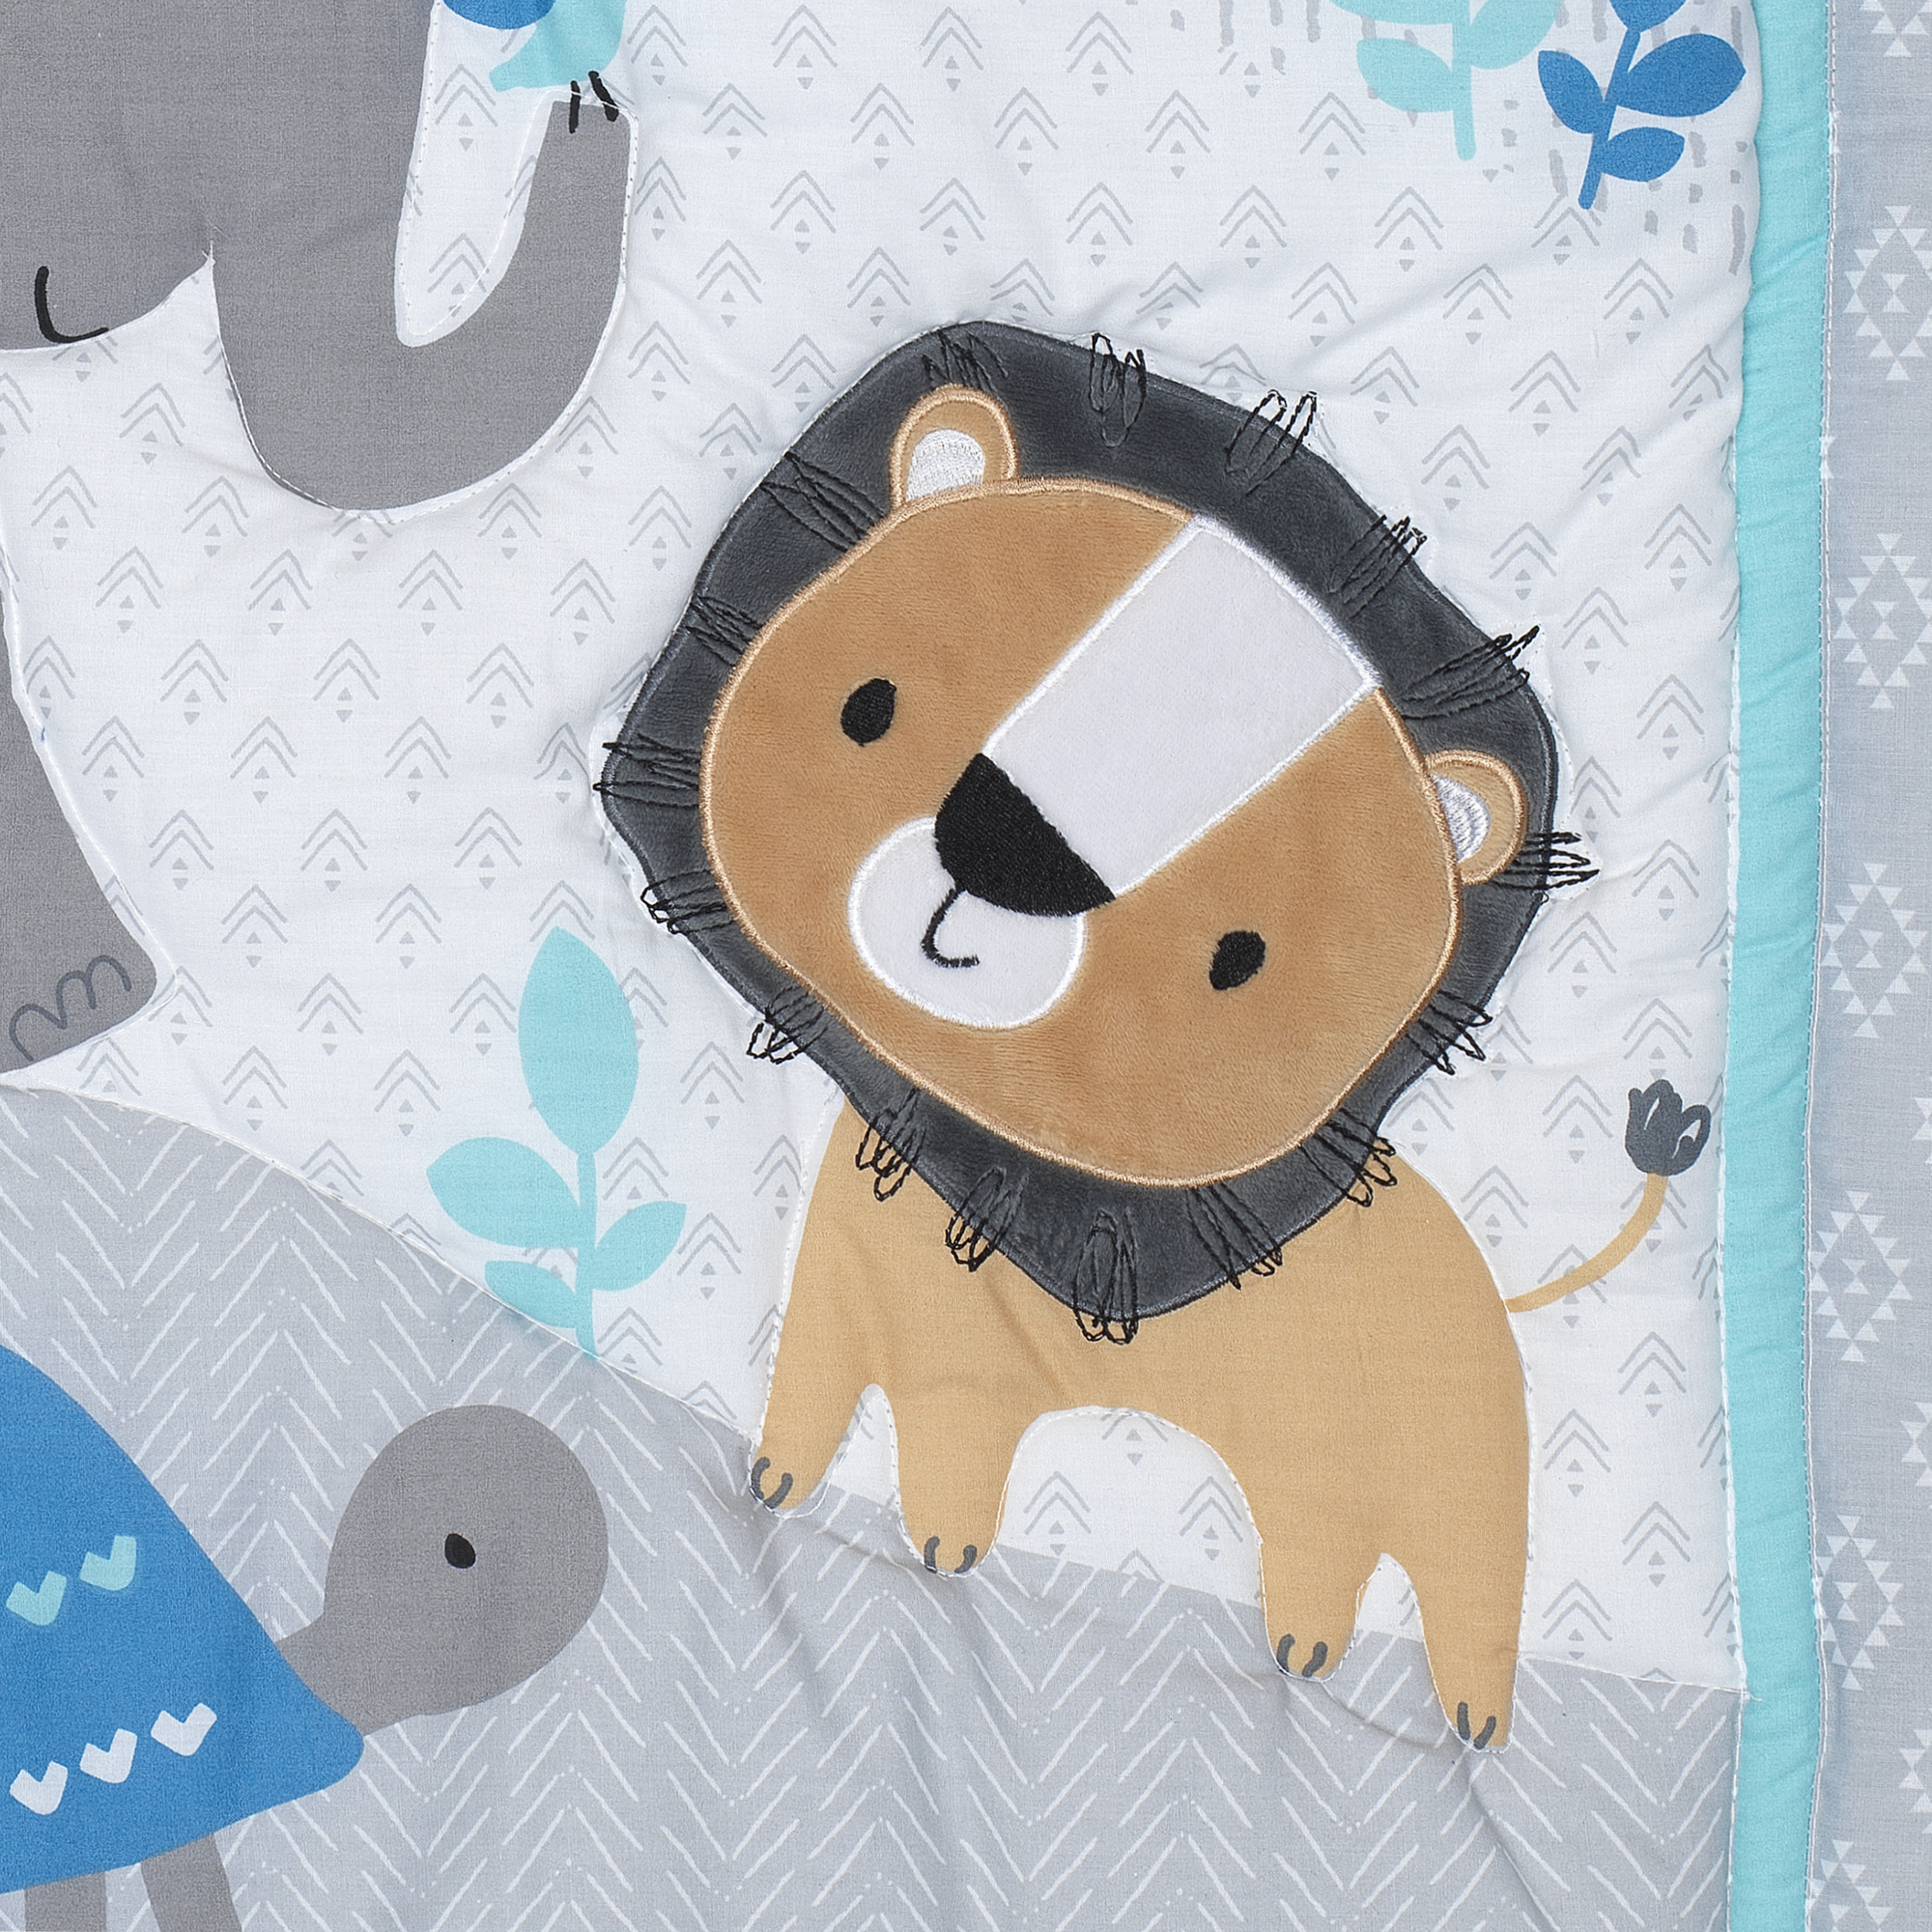 Bedtime Originals Jungle Fun 3-Piece Animals Crib Bedding Set - Blue, Gray, White - image 5 of 7